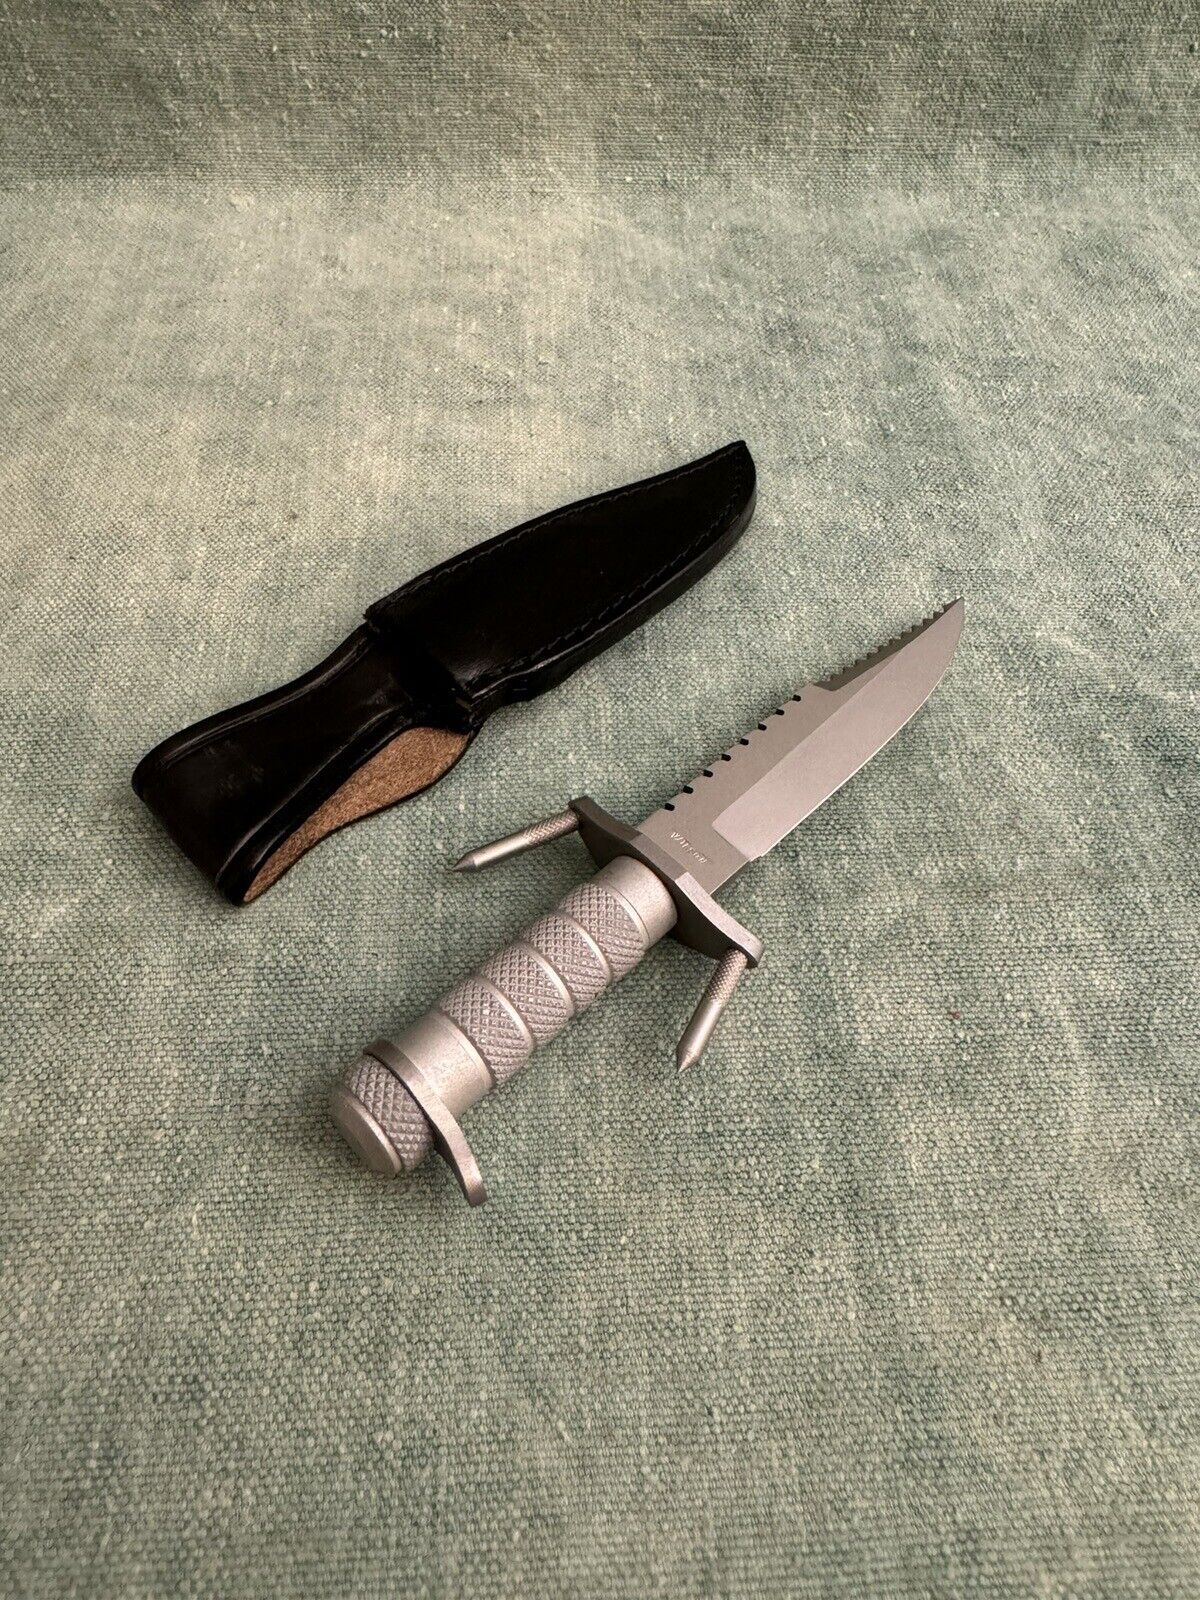 Rare Vintage Buck Mini Master- Miniature Buckmaster 184 Survival Knife - Wilson